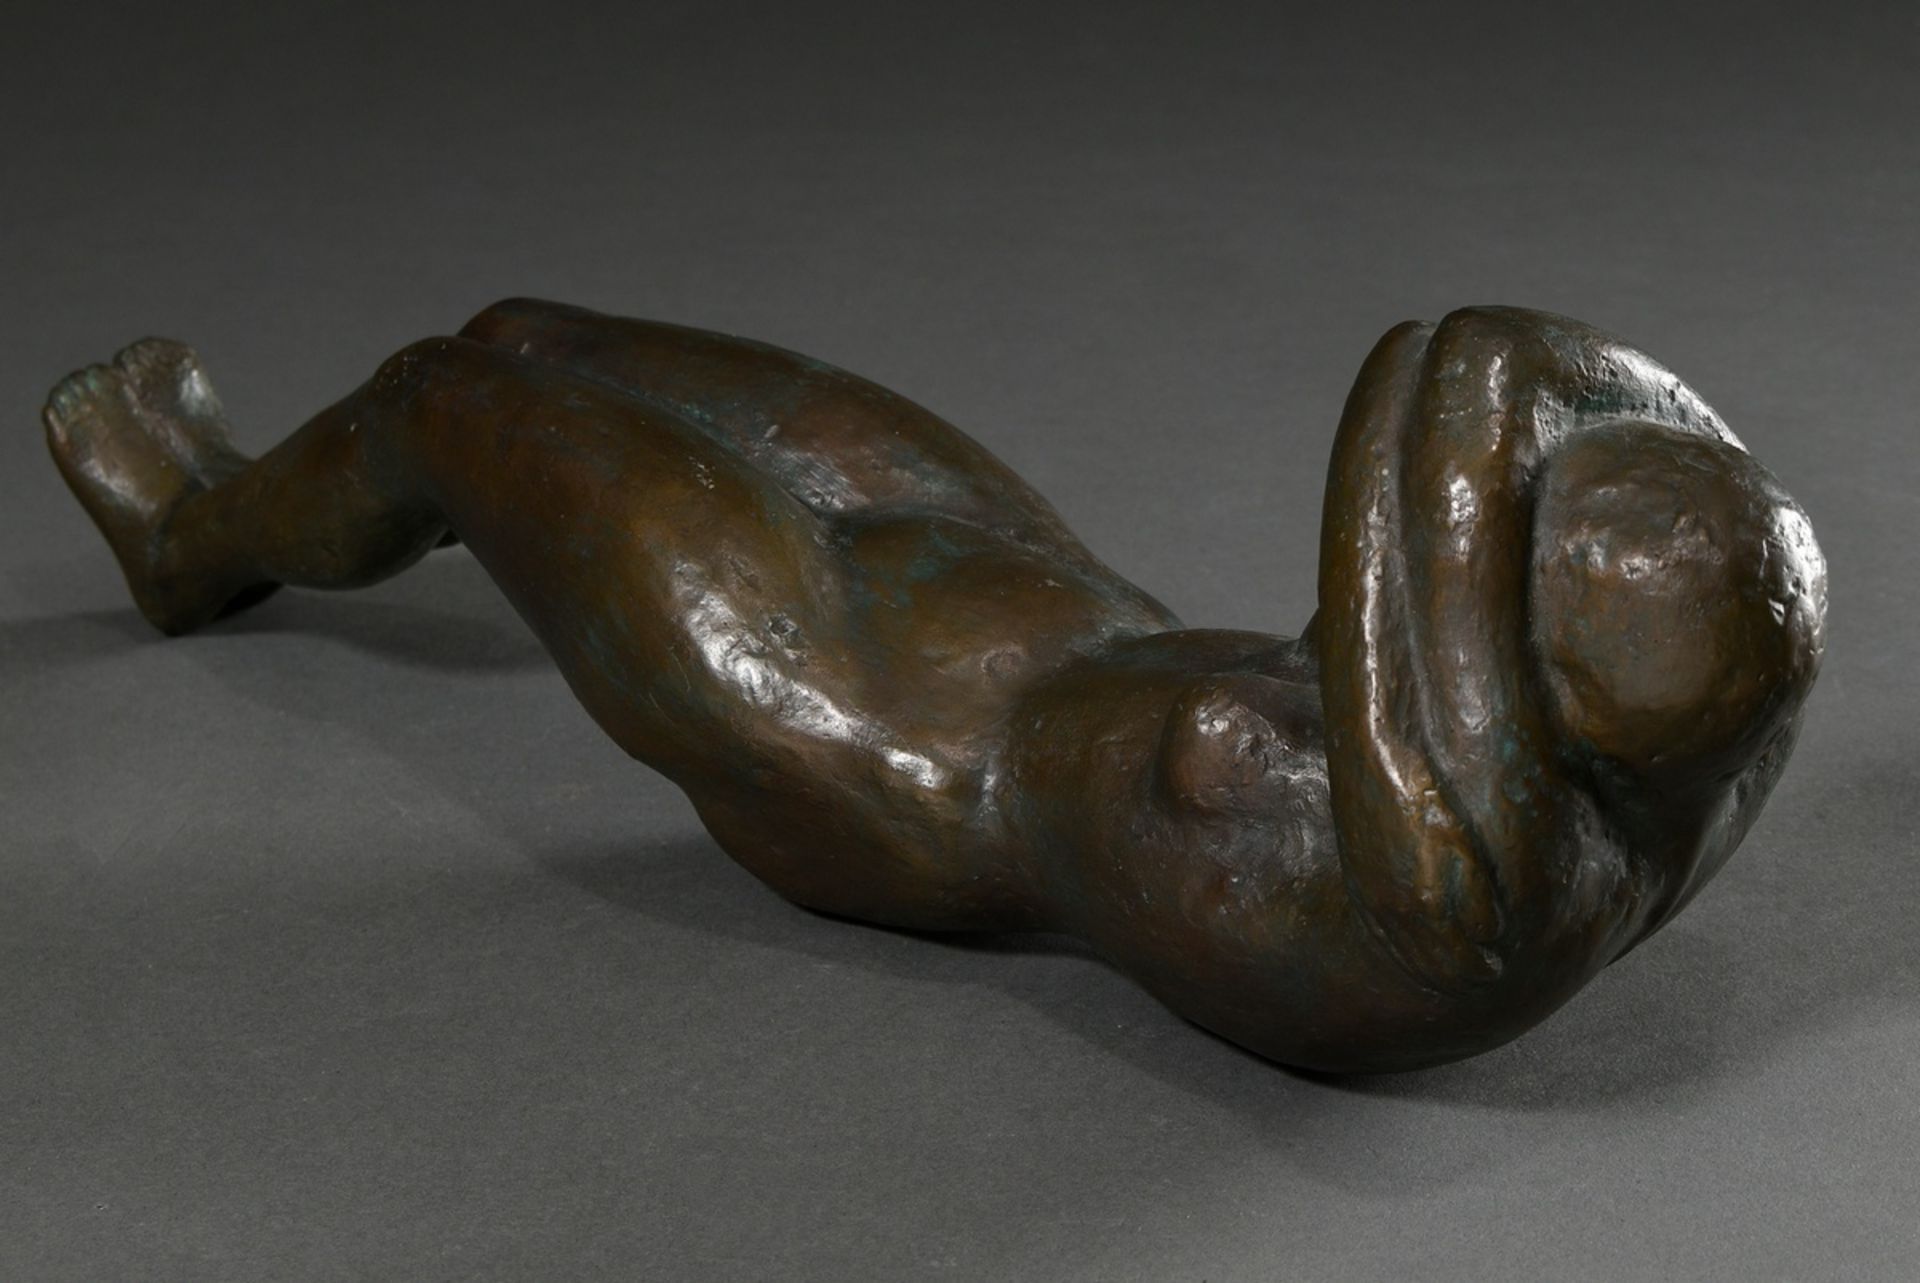 Woebcke, Albert Friedrich Christian (1896-1980) "Reclining female nude", bronze, hollow casting, in - Image 4 of 6